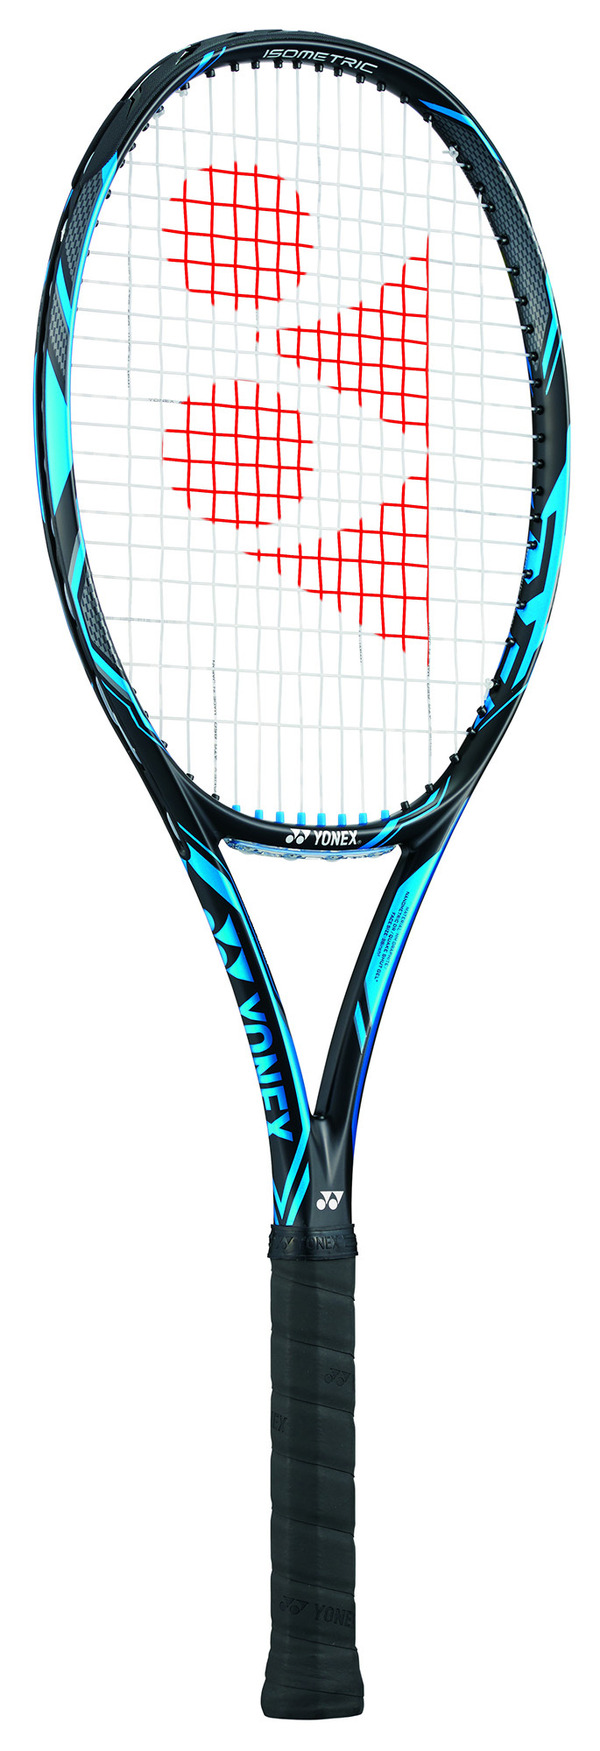 YONEX - 硬式テニスラケット ヨネックス イーゾーン98 yonex ezone 98